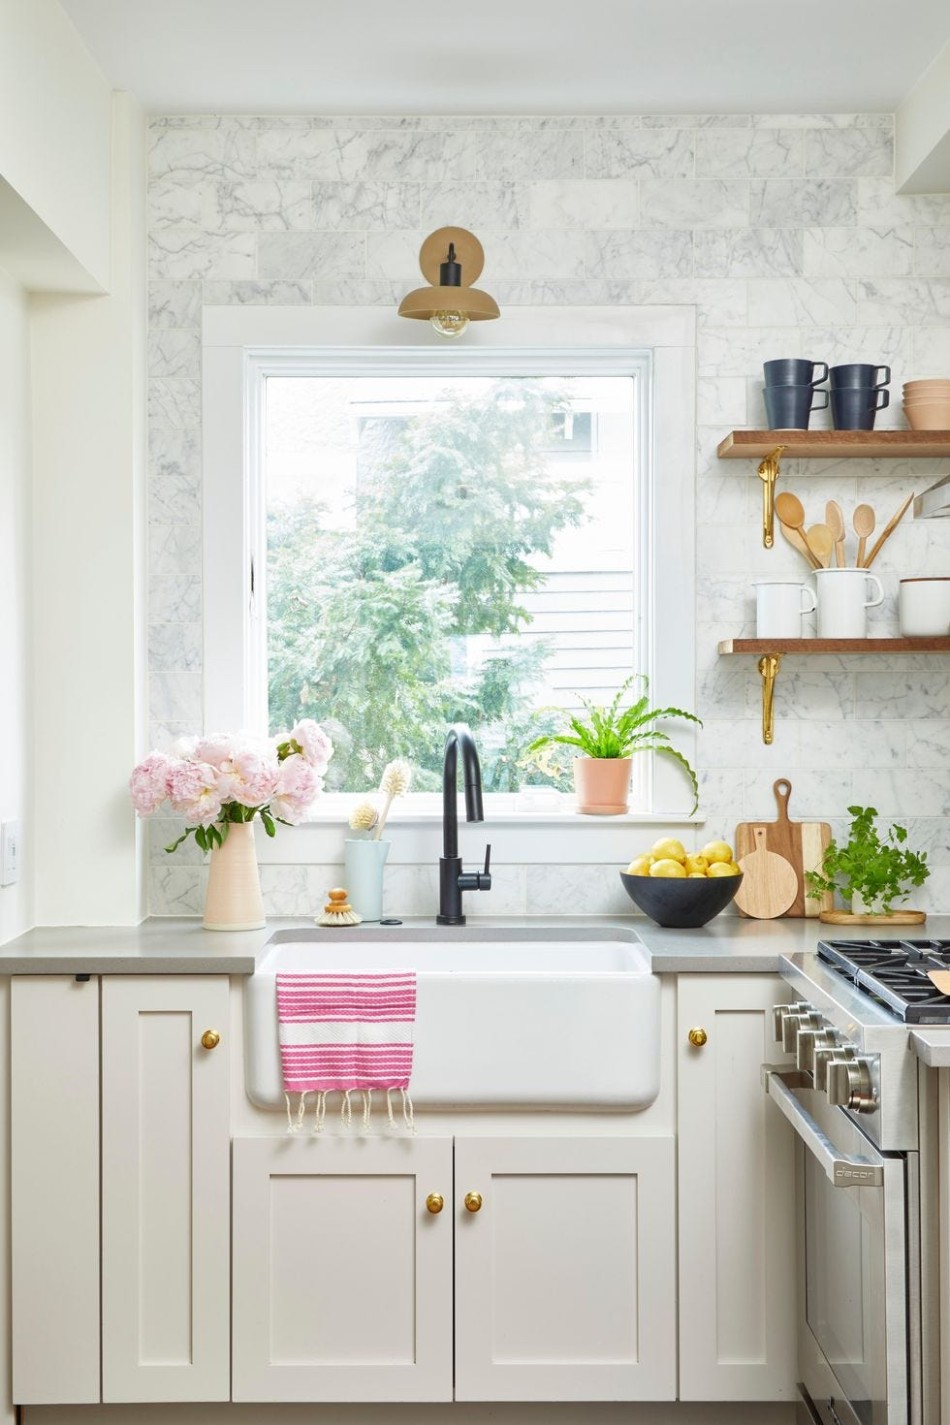 6 Best Small Kitchen Design Ideas - Tiny Kitchen Decorating - decor ideas for kitchens small